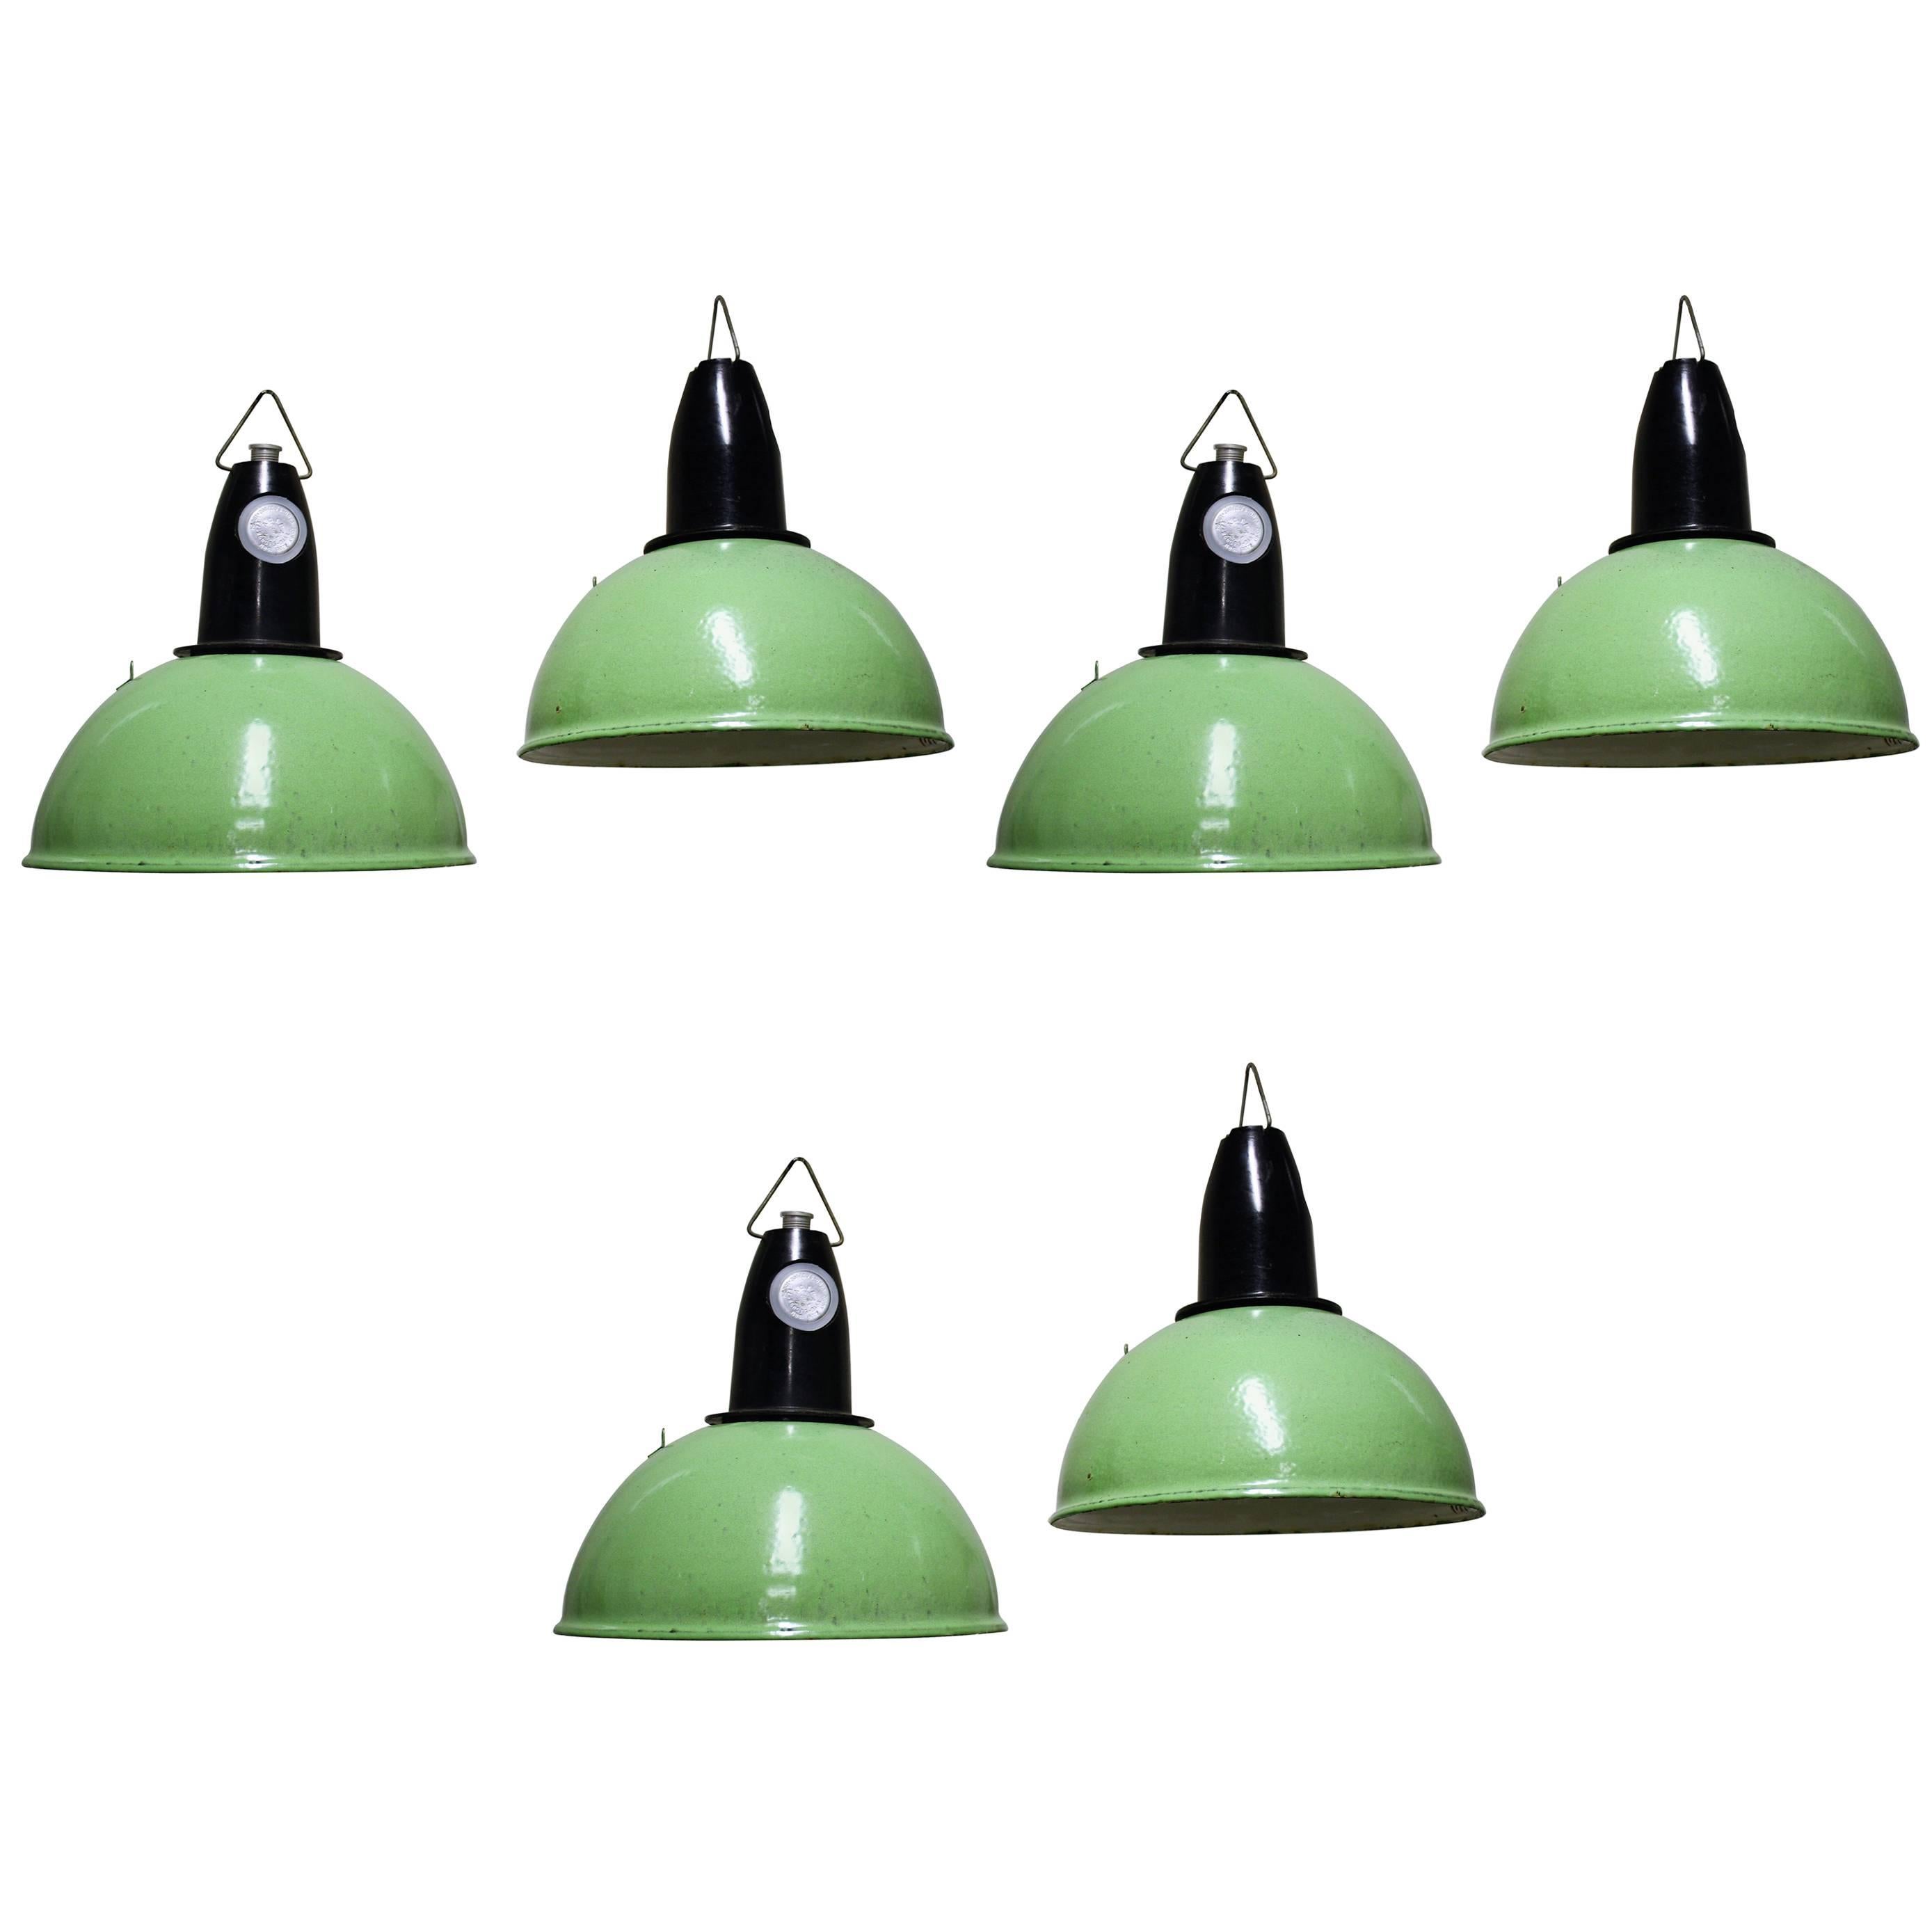 Green Enamel Factory Lamps, 1970s For Sale